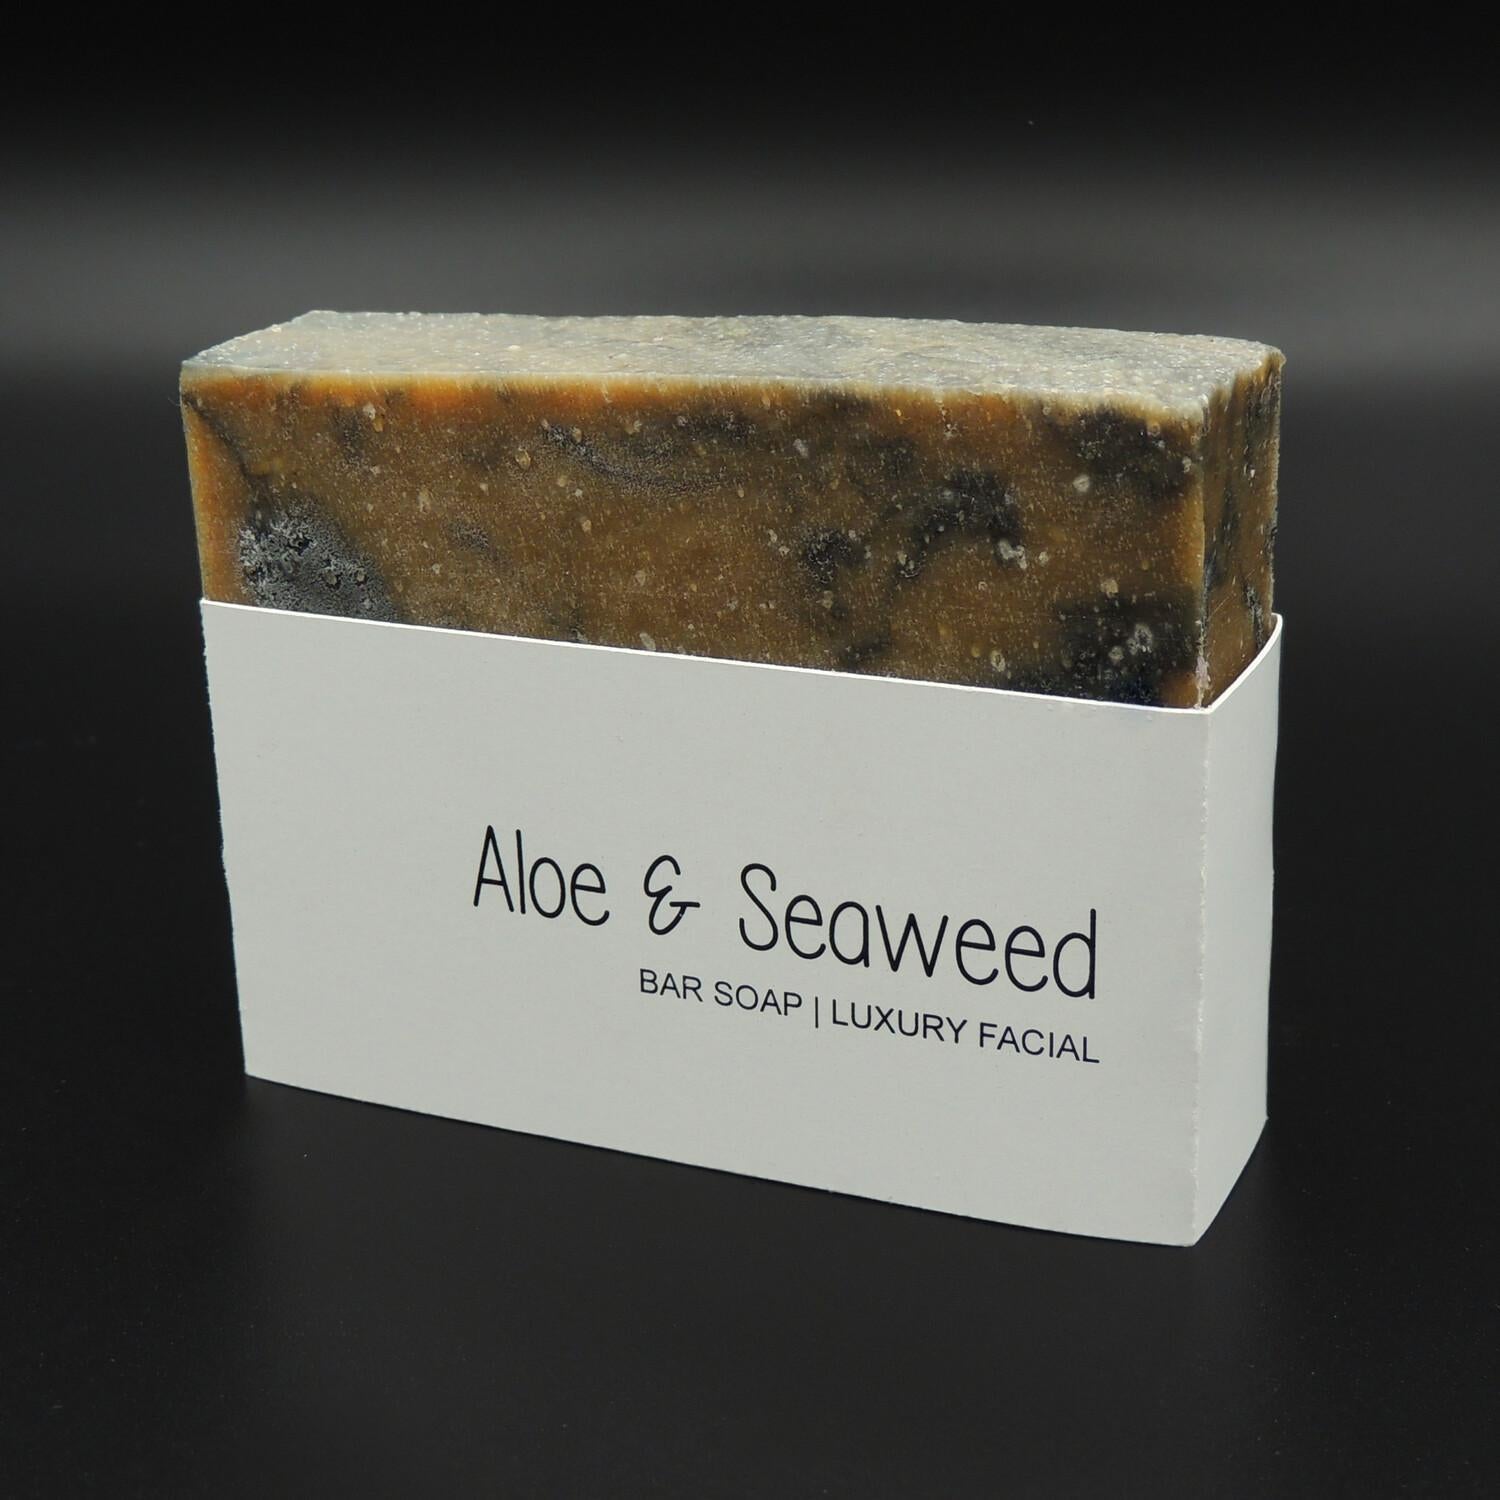 Aloe + Seaweed Facial Bar